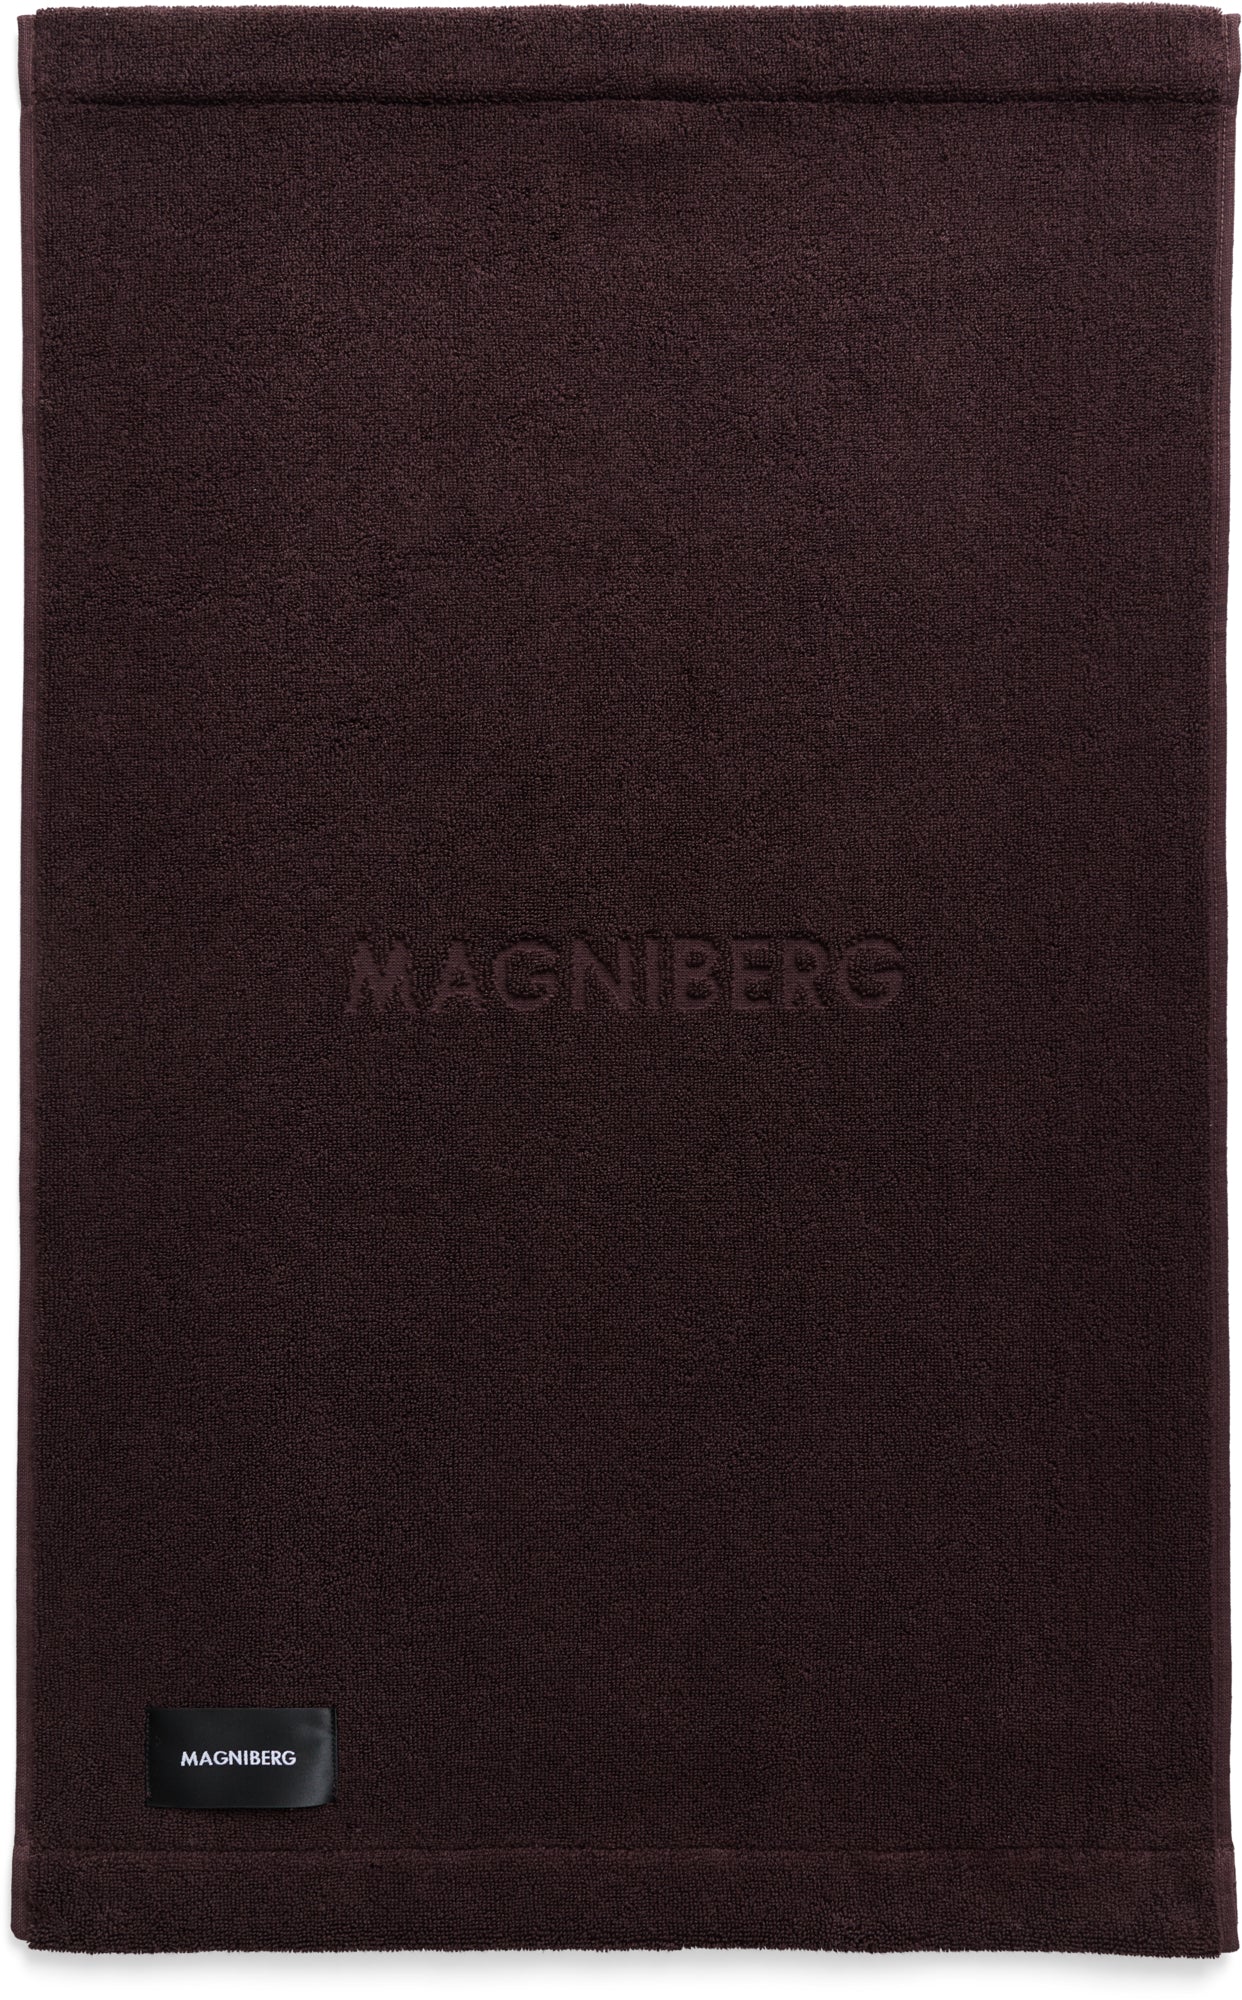 Magniberg - Gelato Håndklæder - Cherry Brown